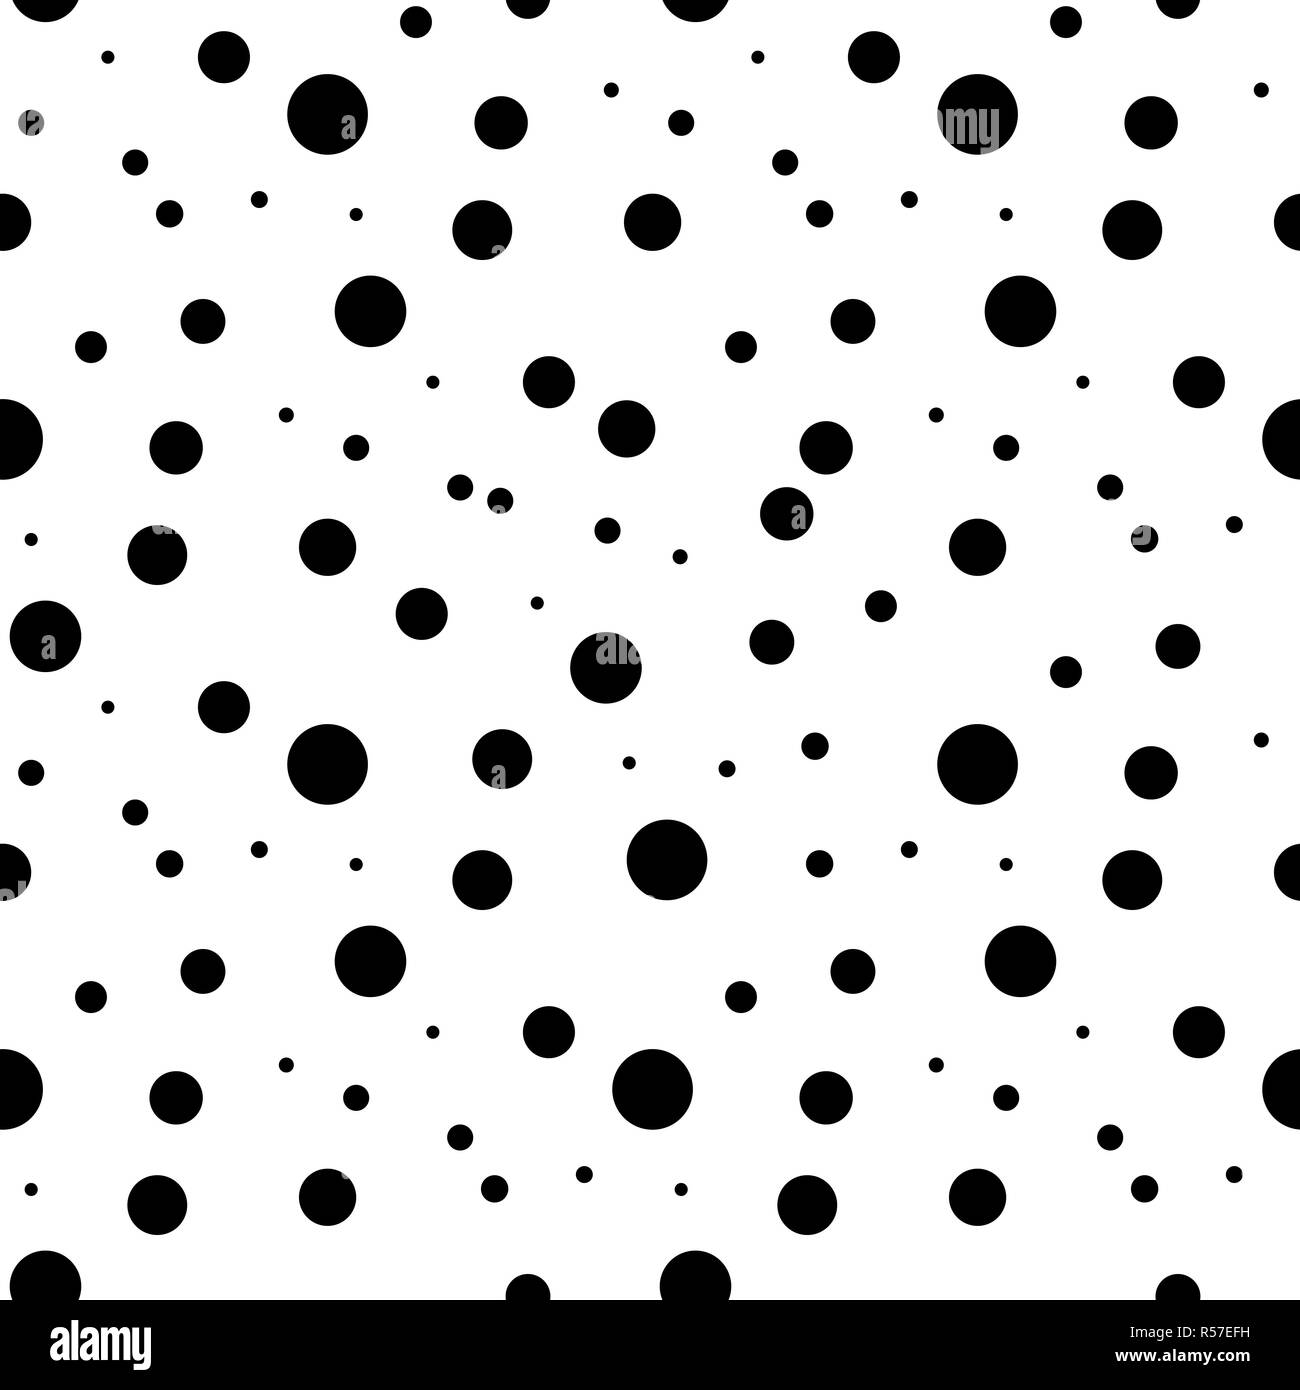 Seamless polka dot pattern. Black dots on white background. Vector